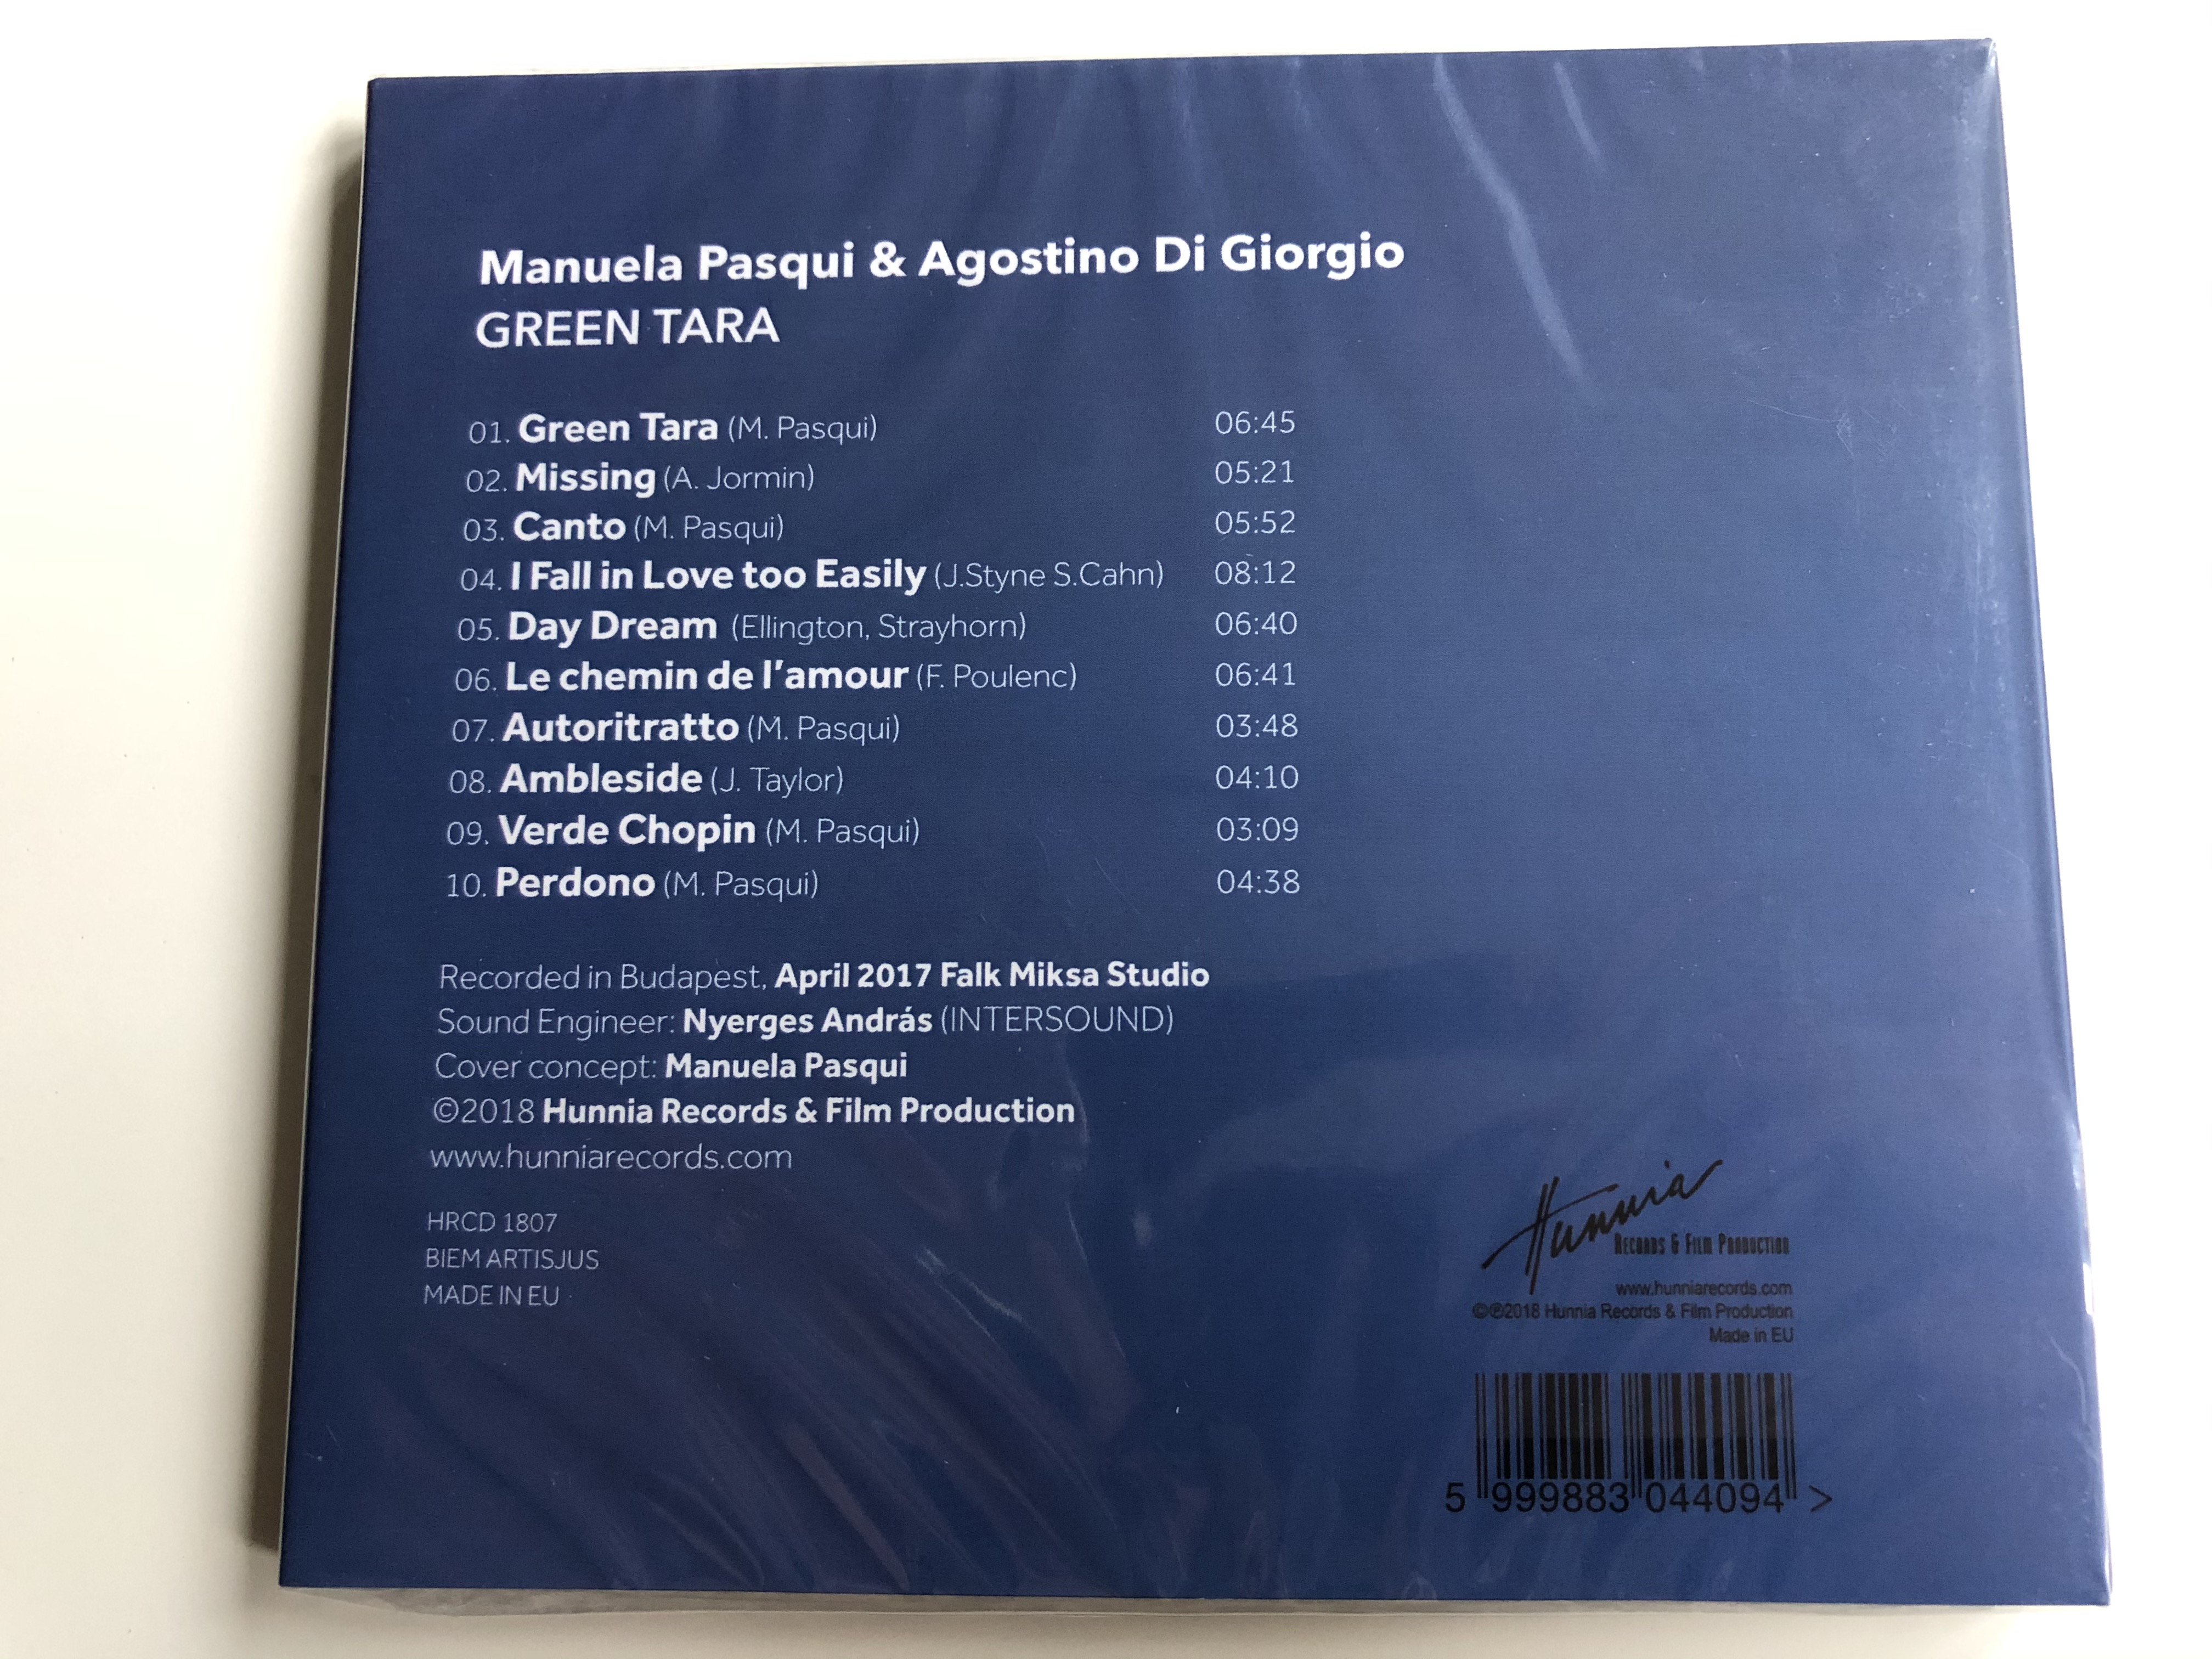 green-tara-manuela-pasqui-agostino-di-giorgio-hunnia-records-film-production-audio-cd-2018-hrcd1807-2-.jpg